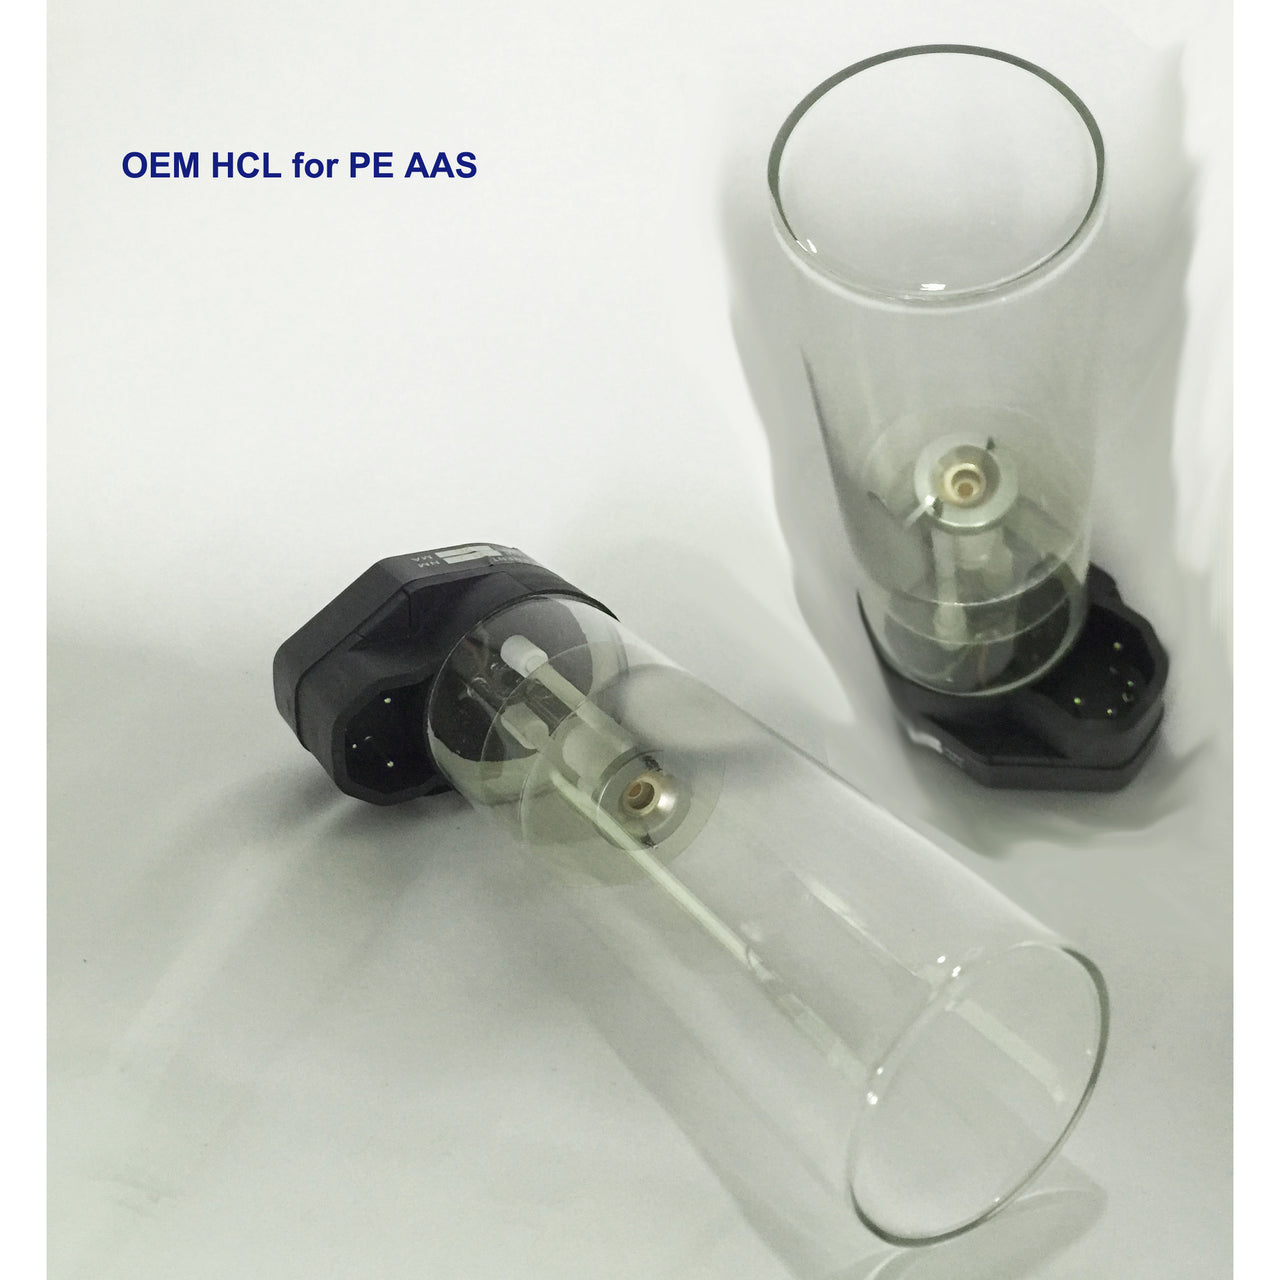 Hollow Cathode Lamp, Beryllium - Be